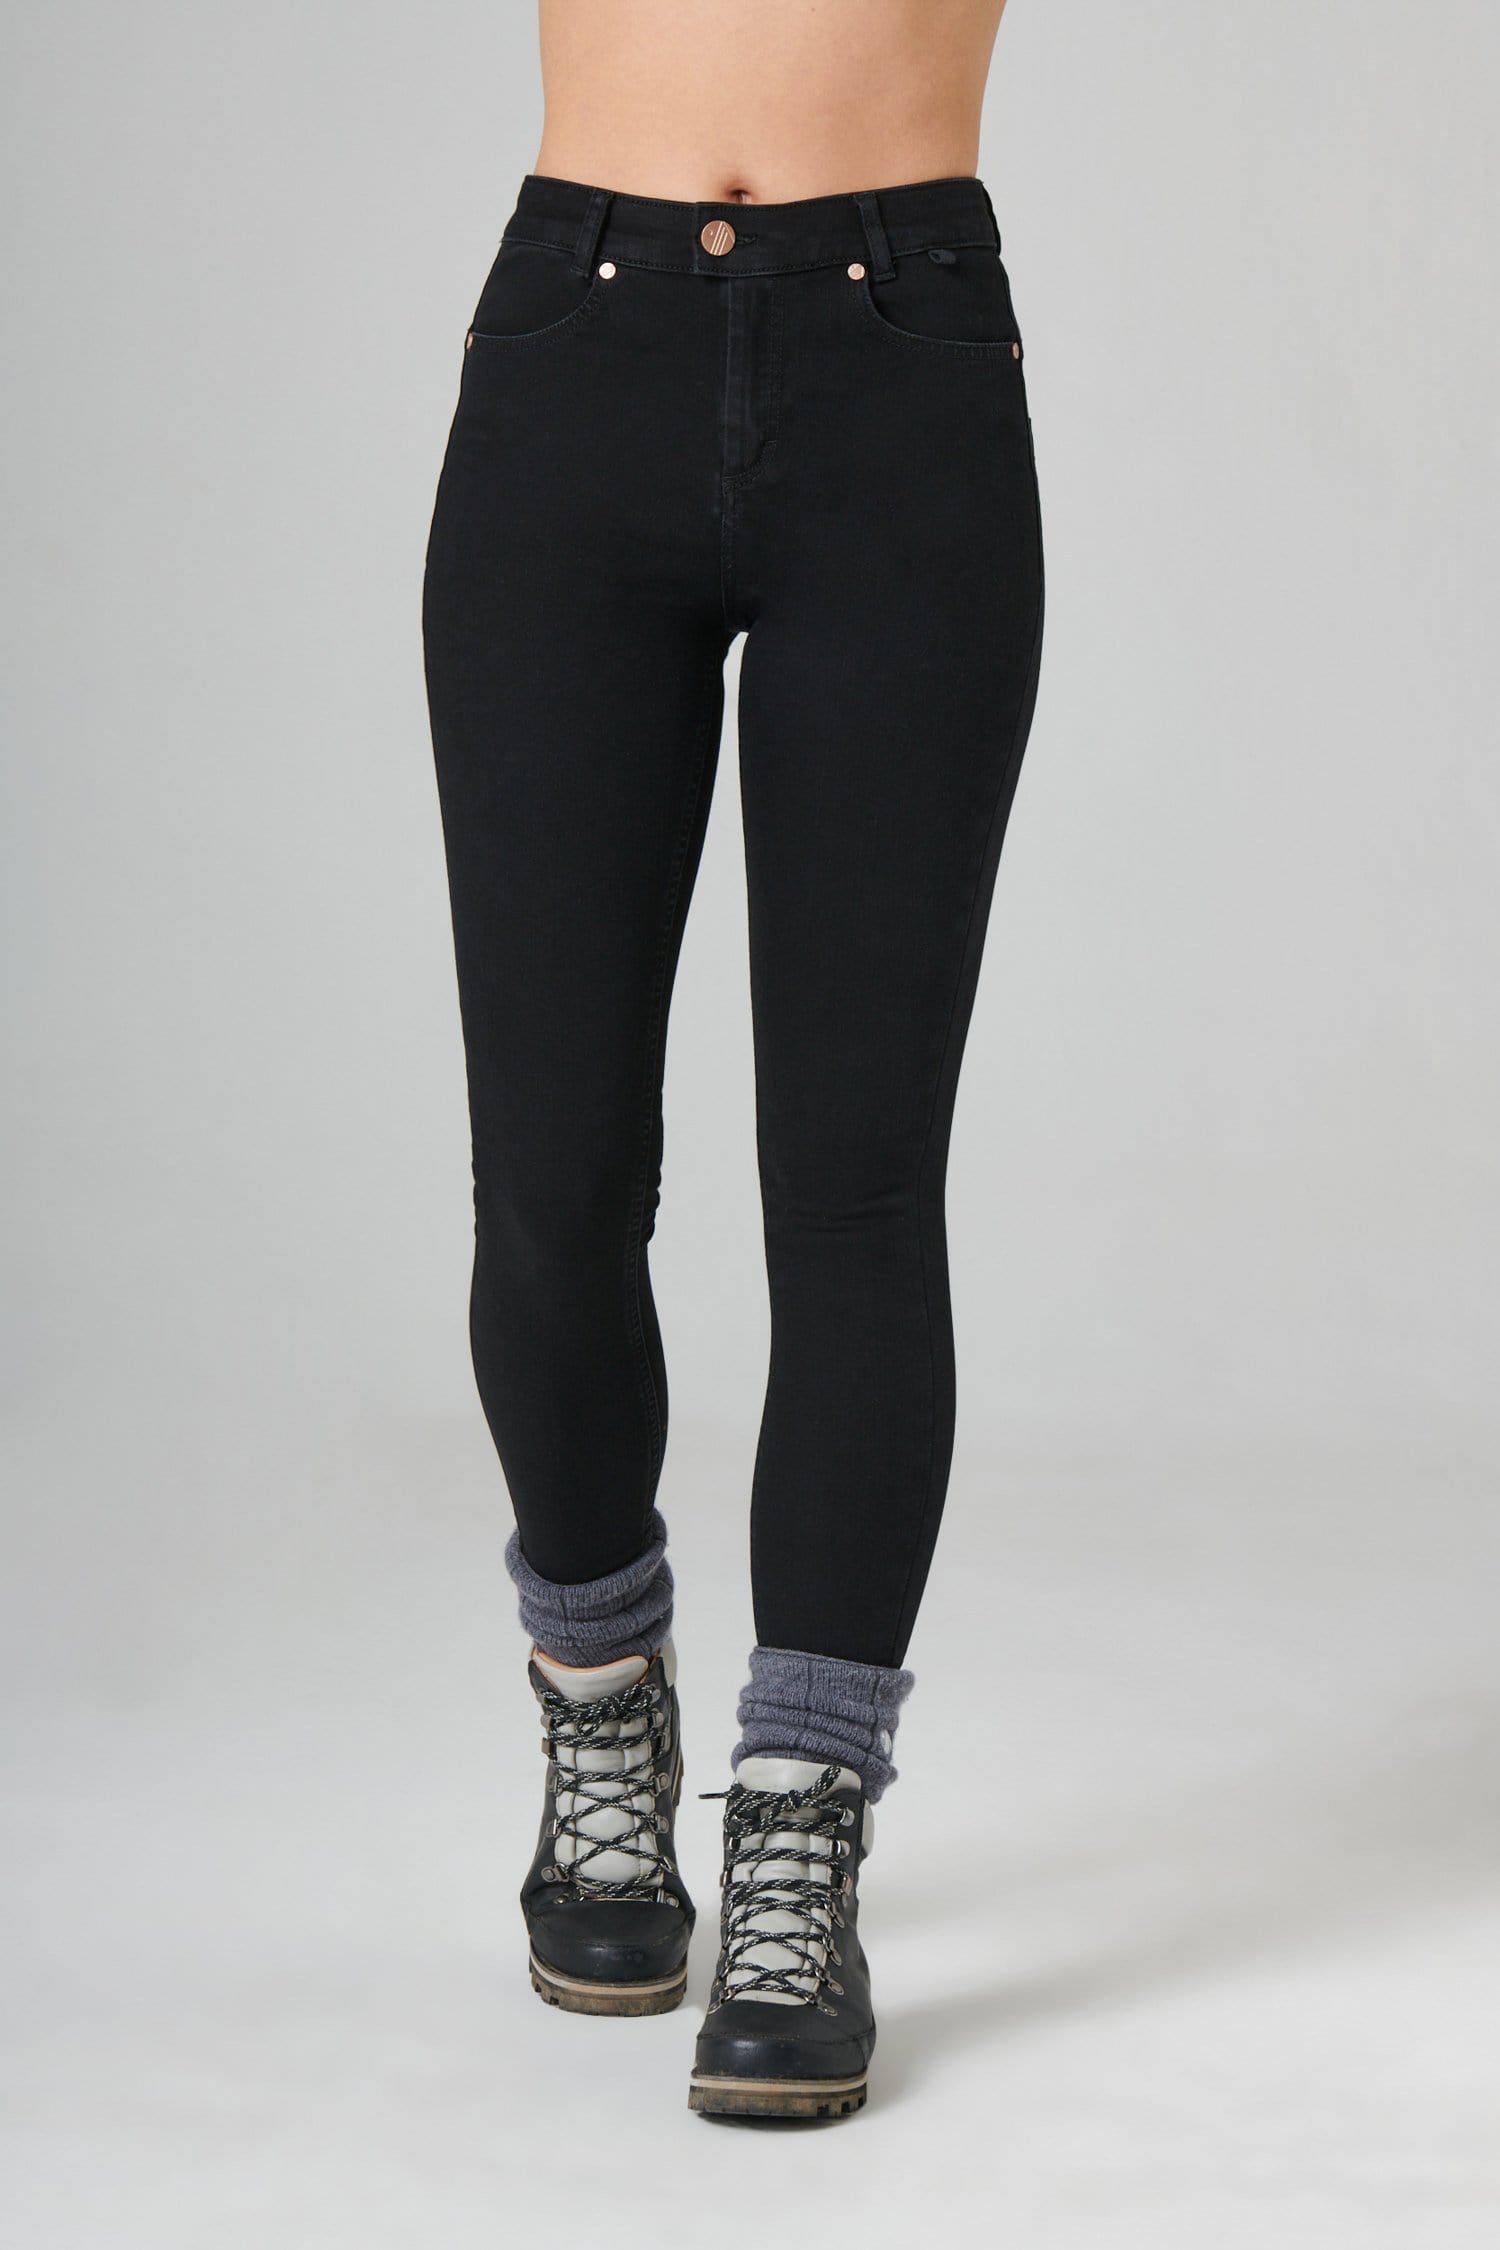 The Skinny Outdoor Jeans - Black Denim - 26p / Uk8 - Womens - Acai Outdoorwear